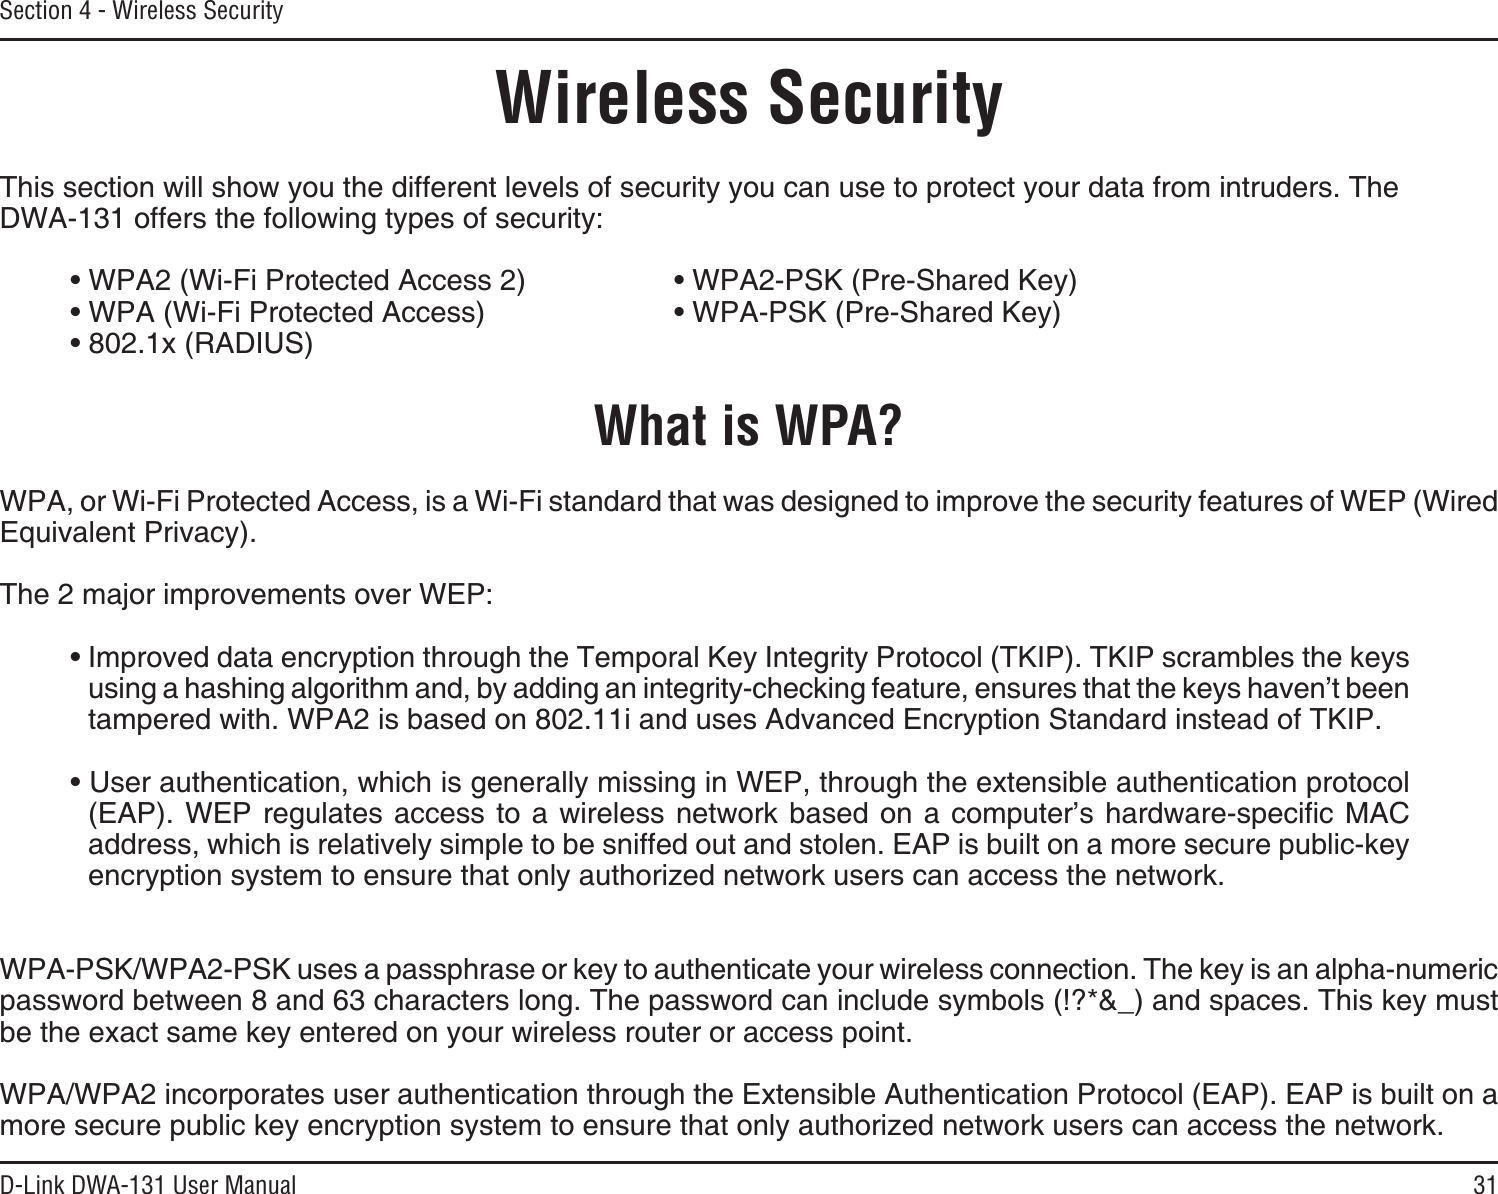 31D-Link DWA-131 User ManualSection 4 - Wireless SecurityWireless SecurityThis section will show you the different levels of security you can use to protect your data from intruders. The DWA-131 offers the following types of security:Ŗ92#9K(K2TQVGEVGF#EEGUU  Ŗ92#25-2TG5JCTGF-G[Ŗ92#9K(K2TQVGEVGF#EEGUU   Ŗ92#25-2TG5JCTGF-G[ŖZ4#&amp;+75What is WPA?WPA, or Wi-Fi Protected Access, is a Wi-Fi standard that was designed to improve the security features of WEP (Wired Equivalent Privacy).The 2 major improvements over WEP: Ŗ+ORTQXGFFCVCGPET[RVKQPVJTQWIJVJG6GORQTCN-G[+PVGITKV[2TQVQEQN6-+26-+2UETCODNGUVJGMG[UWUKPICJCUJKPICNIQTKVJOCPFD[CFFKPICPKPVGITKV[EJGEMKPIHGCVWTGGPUWTGUVJCVVJGMG[UJCXGPŏVDGGPtampered with. WPA2 is based on 802.11i and uses Advanced Encryption Standard instead of TKIP.Ŗ7UGTCWVJGPVKECVKQPYJKEJKUIGPGTCNN[OKUUKPIKP9&apos;2VJTQWIJVJGGZVGPUKDNGCWVJGPVKECVKQPRTQVQEQN&apos;#29&apos;2TGIWNCVGUCEEGUUVQCYKTGNGUUPGVYQTM DCUGF QP C EQORWVGTŏU JCTFYCTGURGEKſE /#%address, which is relatively simple to be sniffed out and stolen. EAP is built on a more secure public-key GPET[RVKQPU[UVGOVQGPUWTGVJCVQPN[CWVJQTK\GFPGVYQTMWUGTUECPCEEGUUVJGPGVYQTM92#25-92#25-WUGUCRCUURJTCUGQTMG[VQCWVJGPVKECVG[QWTYKTGNGUUEQPPGEVKQP6JGMG[KUCPCNRJCPWOGTKERCUUYQTFDGVYGGPCPFEJCTCEVGTUNQPI6JGRCUUYQTFECPKPENWFGU[ODQNU!ACPFURCEGU6JKUMG[OWUVbe the exact same key entered on your wireless router or access point.92#92#KPEQTRQTCVGUWUGTCWVJGPVKECVKQPVJTQWIJVJG&apos;ZVGPUKDNG#WVJGPVKECVKQP2TQVQEQN&apos;#2&apos;#2KUDWKNVQPCOQTGUGEWTGRWDNKEMG[GPET[RVKQPU[UVGOVQGPUWTGVJCVQPN[CWVJQTK\GFPGVYQTMWUGTUECPCEEGUUVJGPGVYQTM